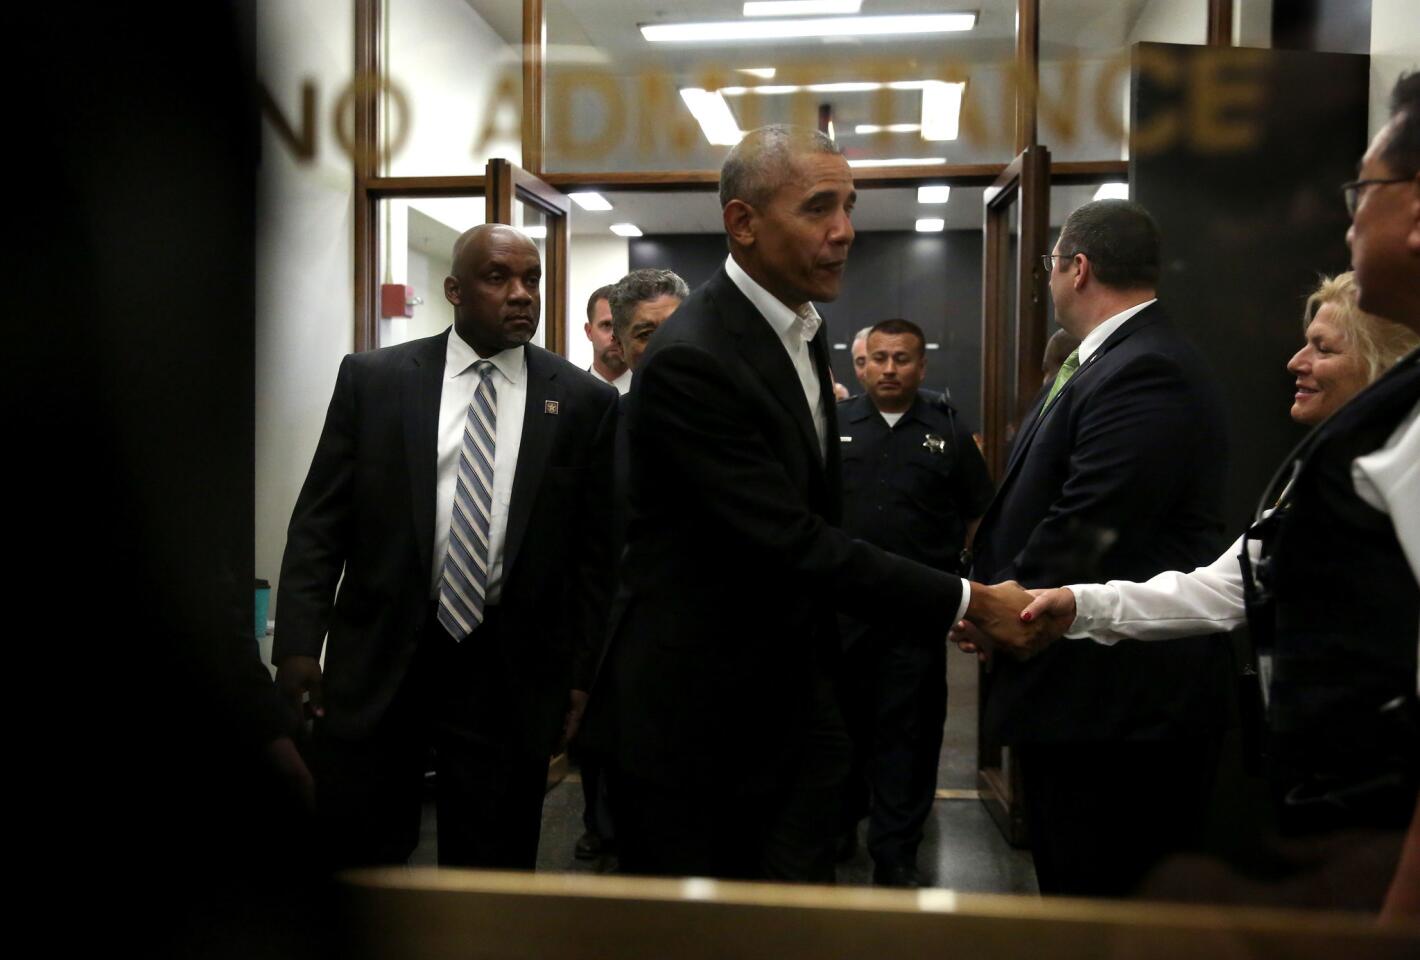 Obama summoned for jury service